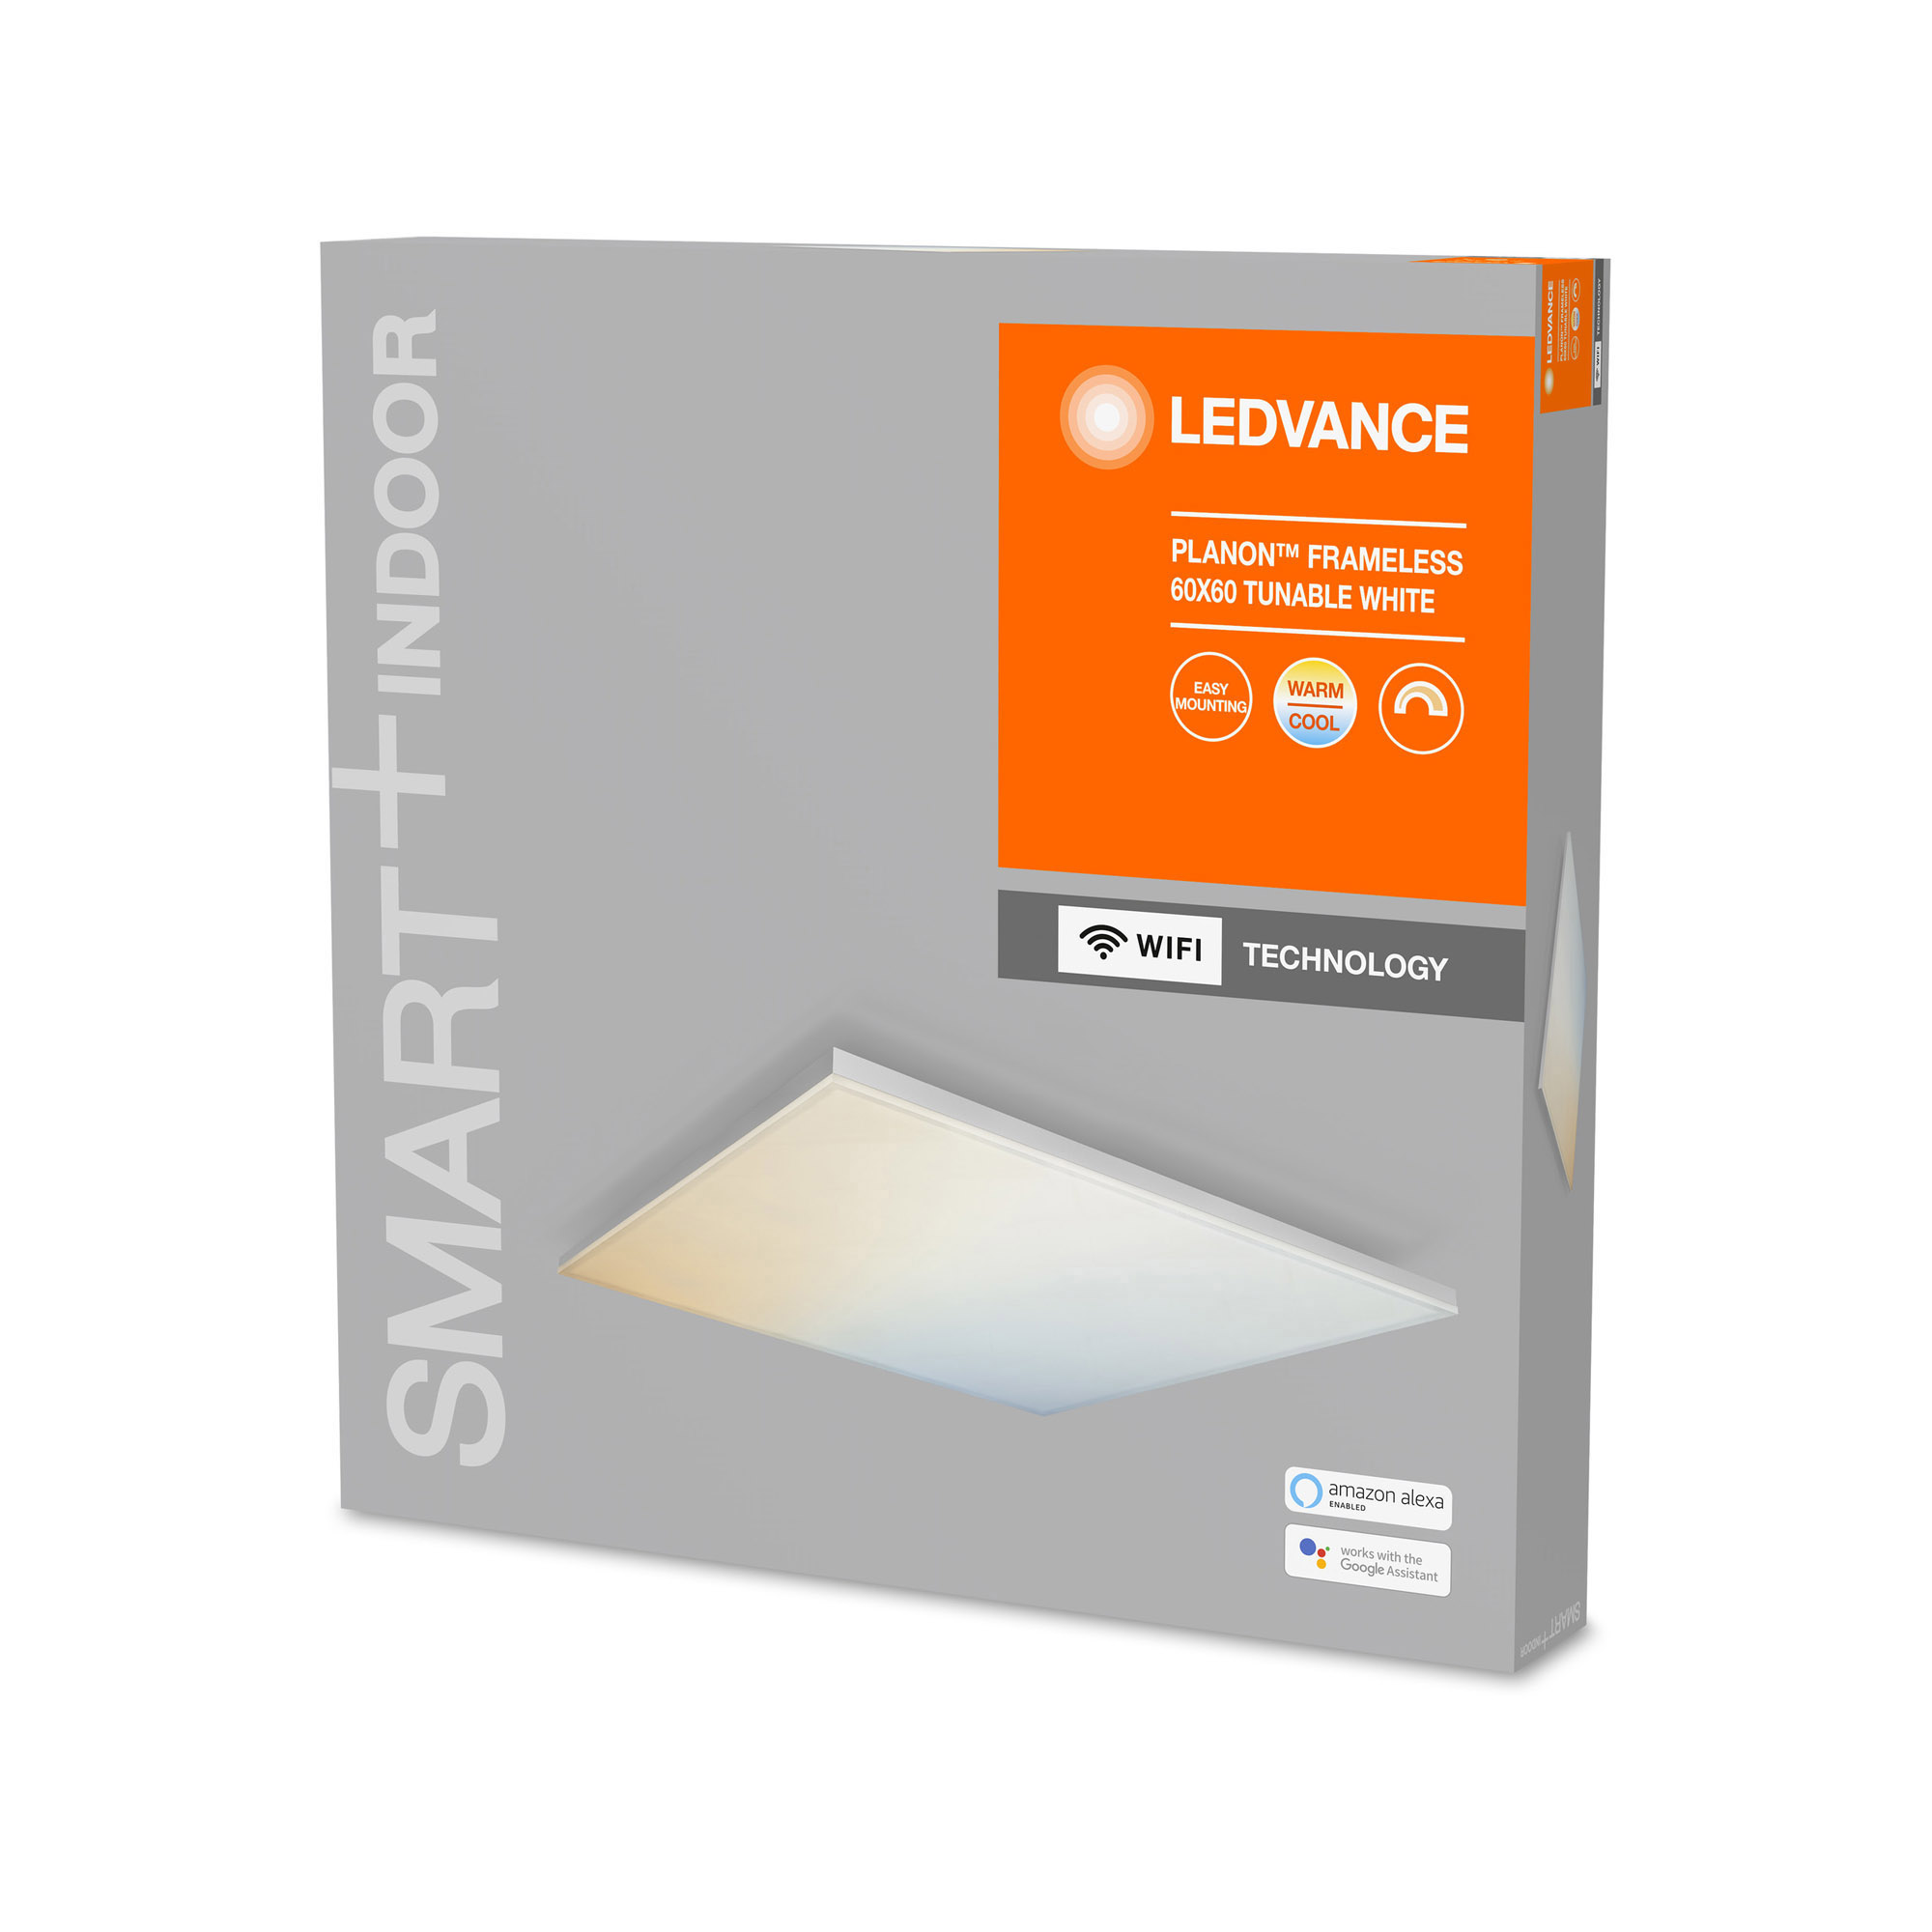 LEDVANCE SMART+ WiFi Tunable White LED Panel PLANON FRAMELESS 60x60cm 3400lm